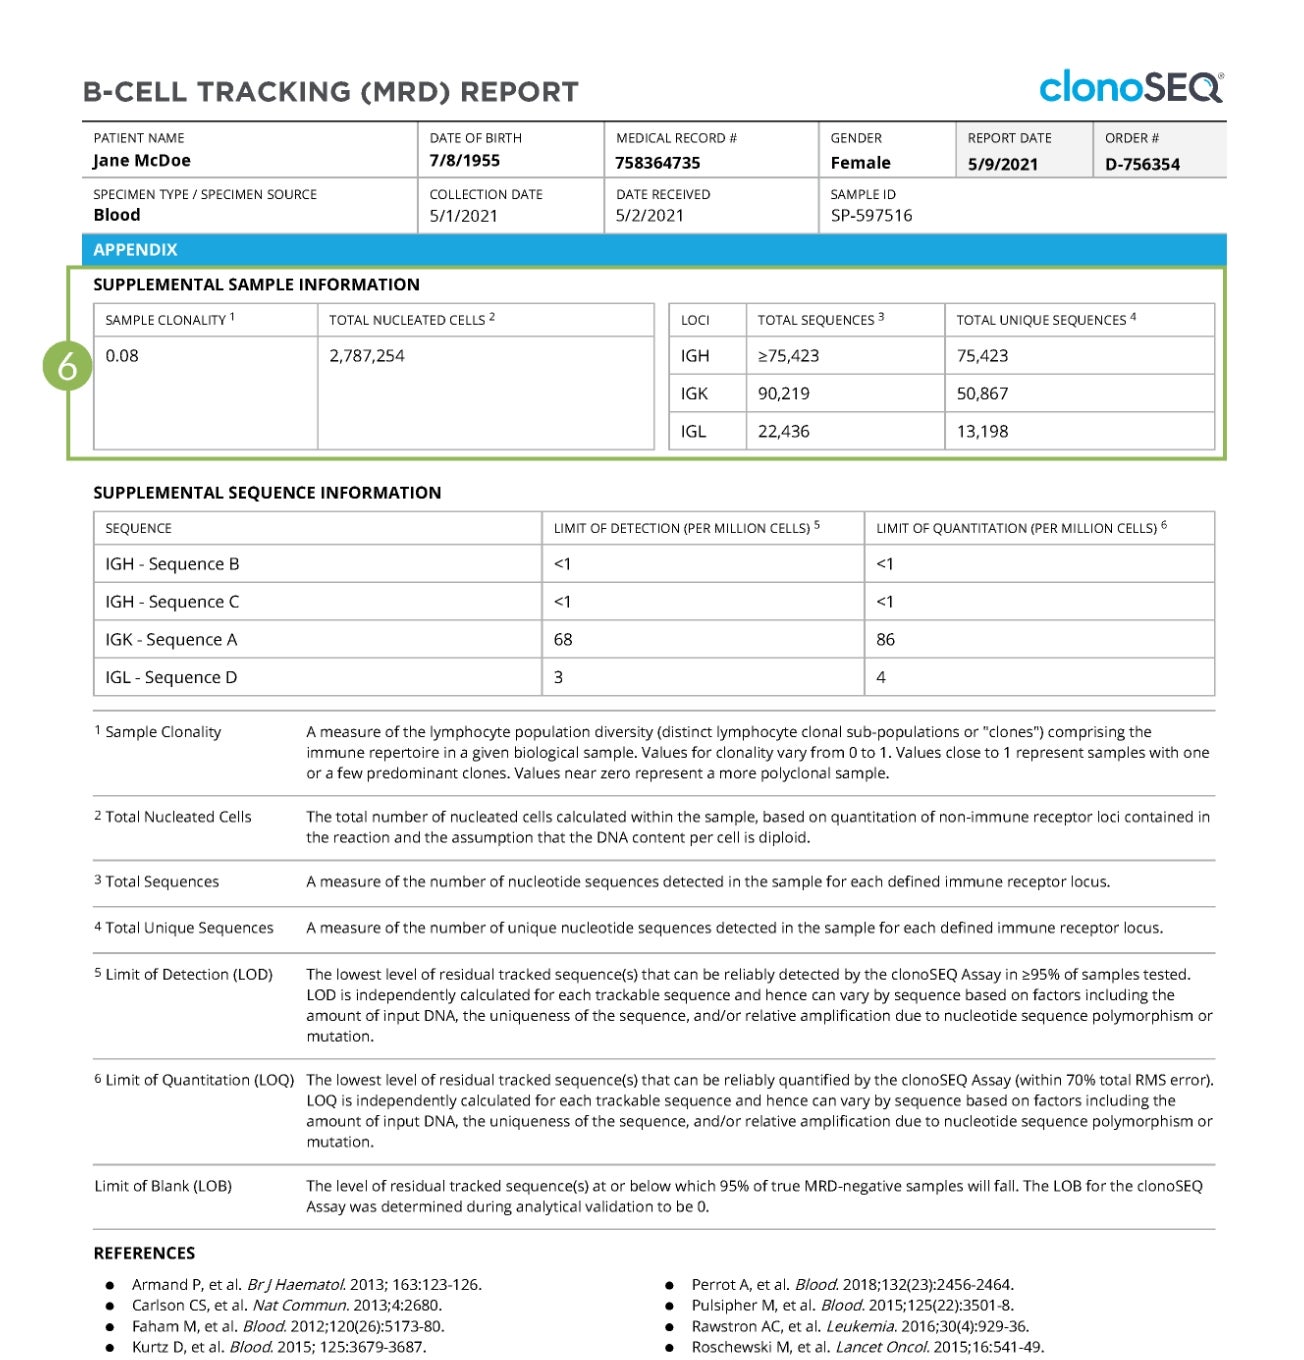 A sample clonoSEQ Tracking (MRD) Report